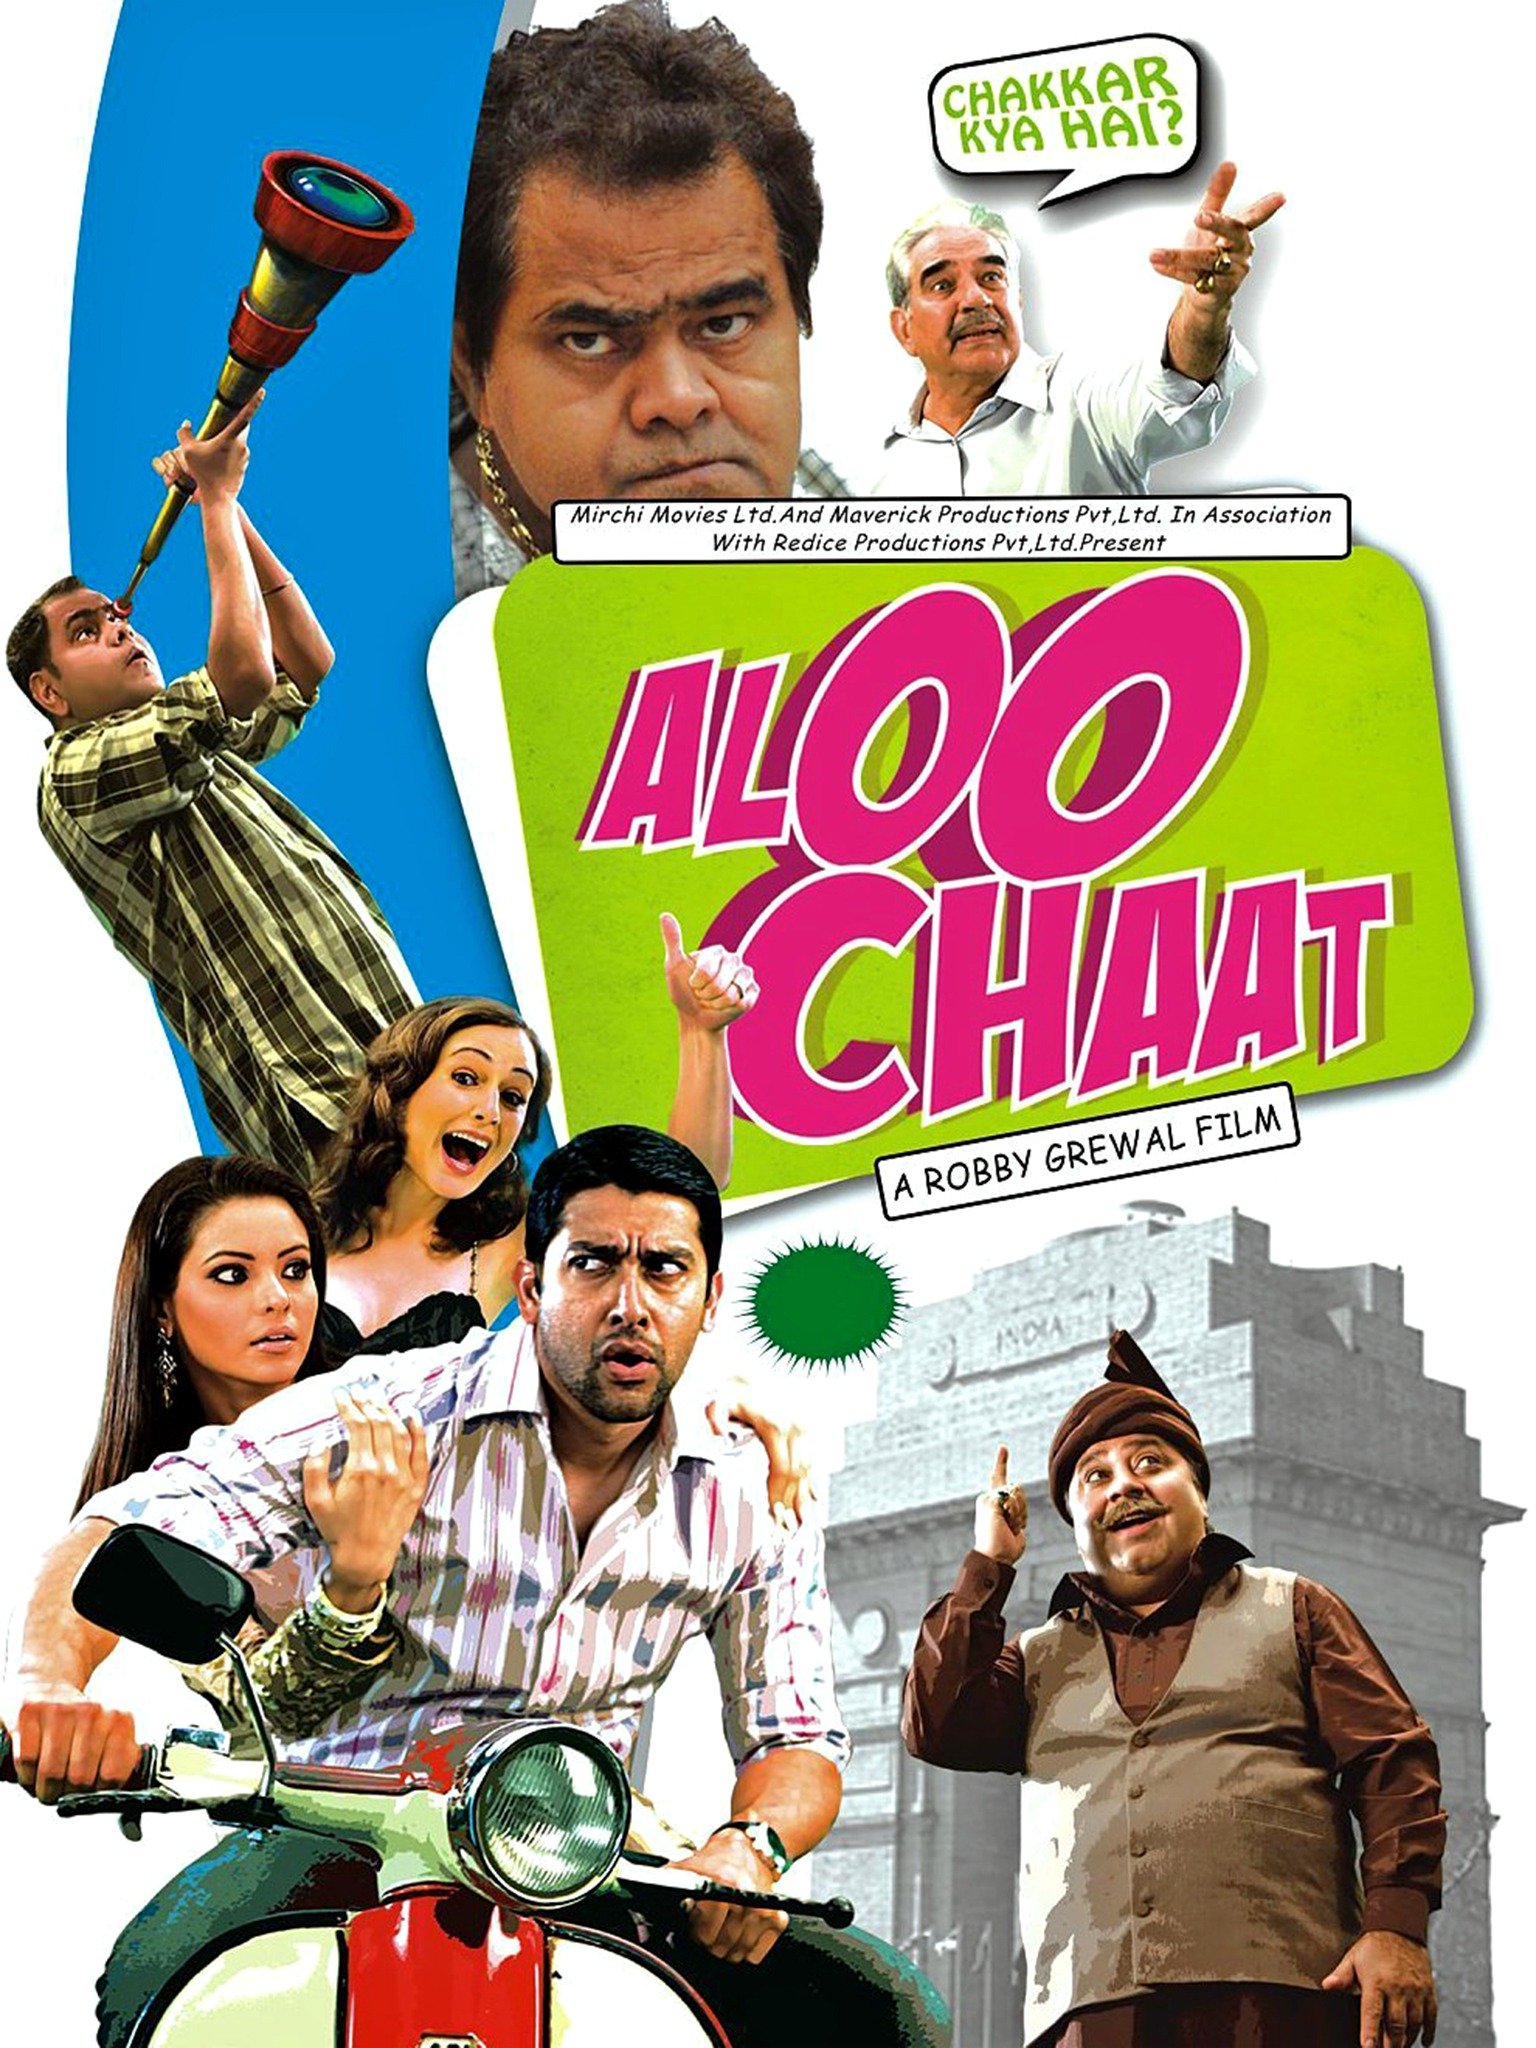 Aloo Chaat 2009 6026 Poster.jpg